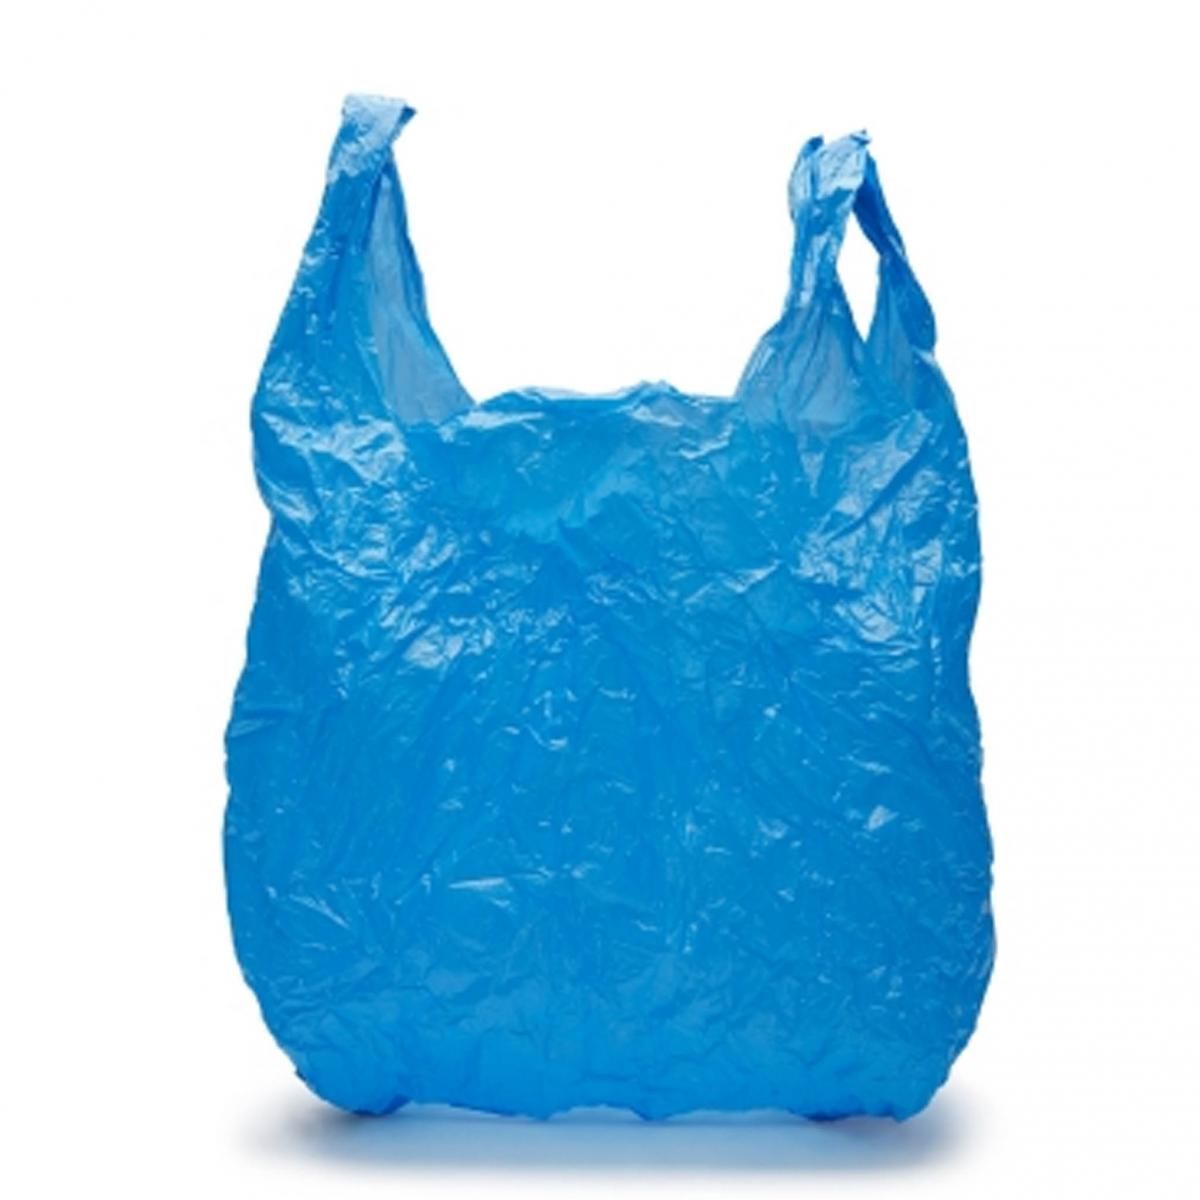 Do You Ever Feel...Like a Plastic Bag?